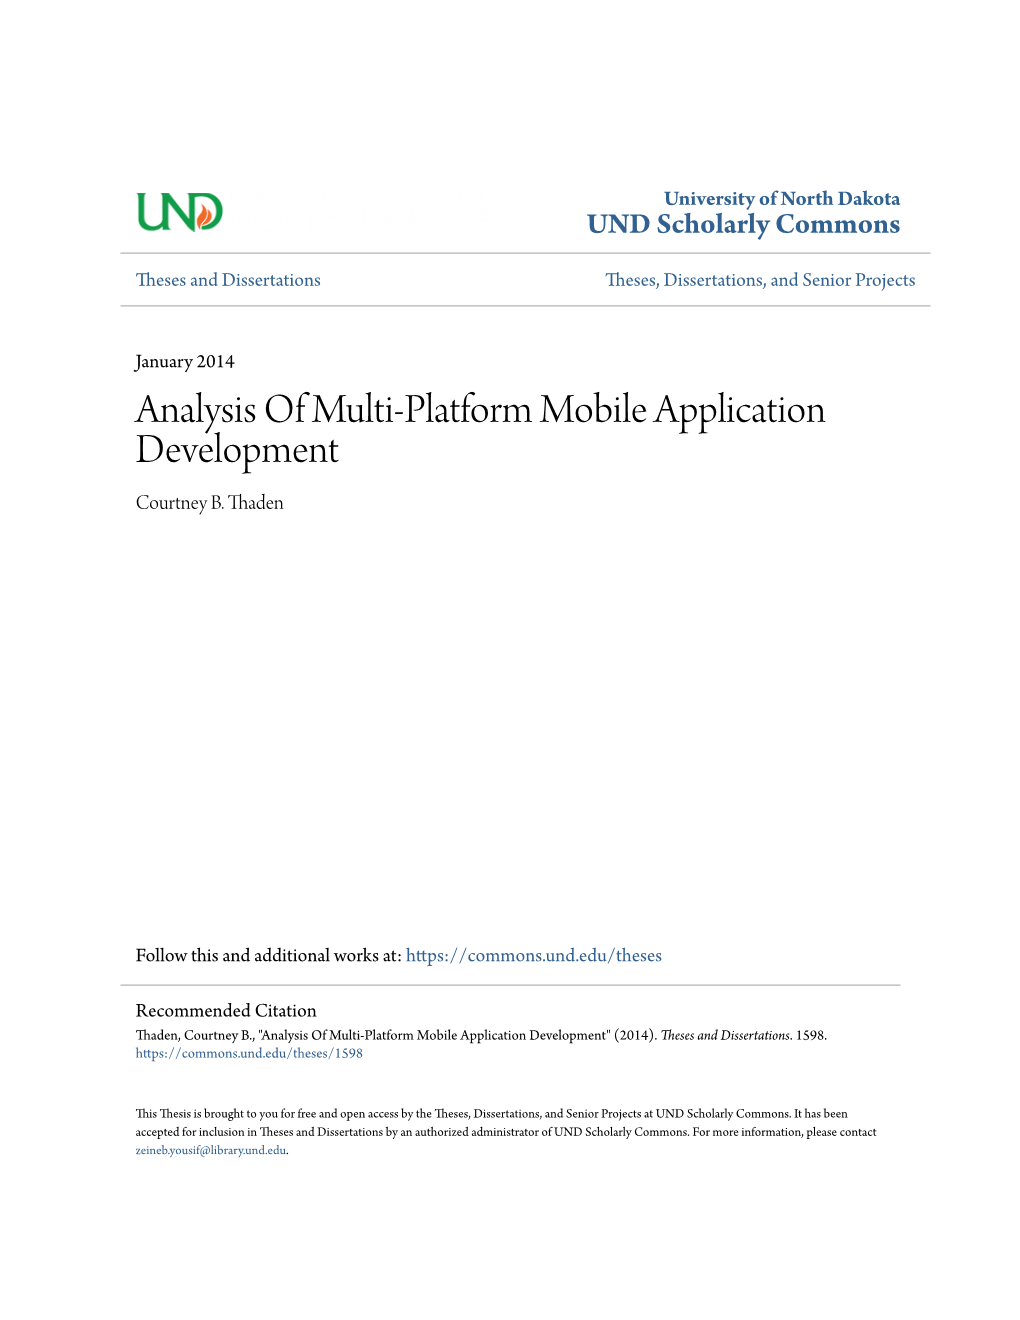 Analysis of Multi-Platform Mobile Application Development Courtney B